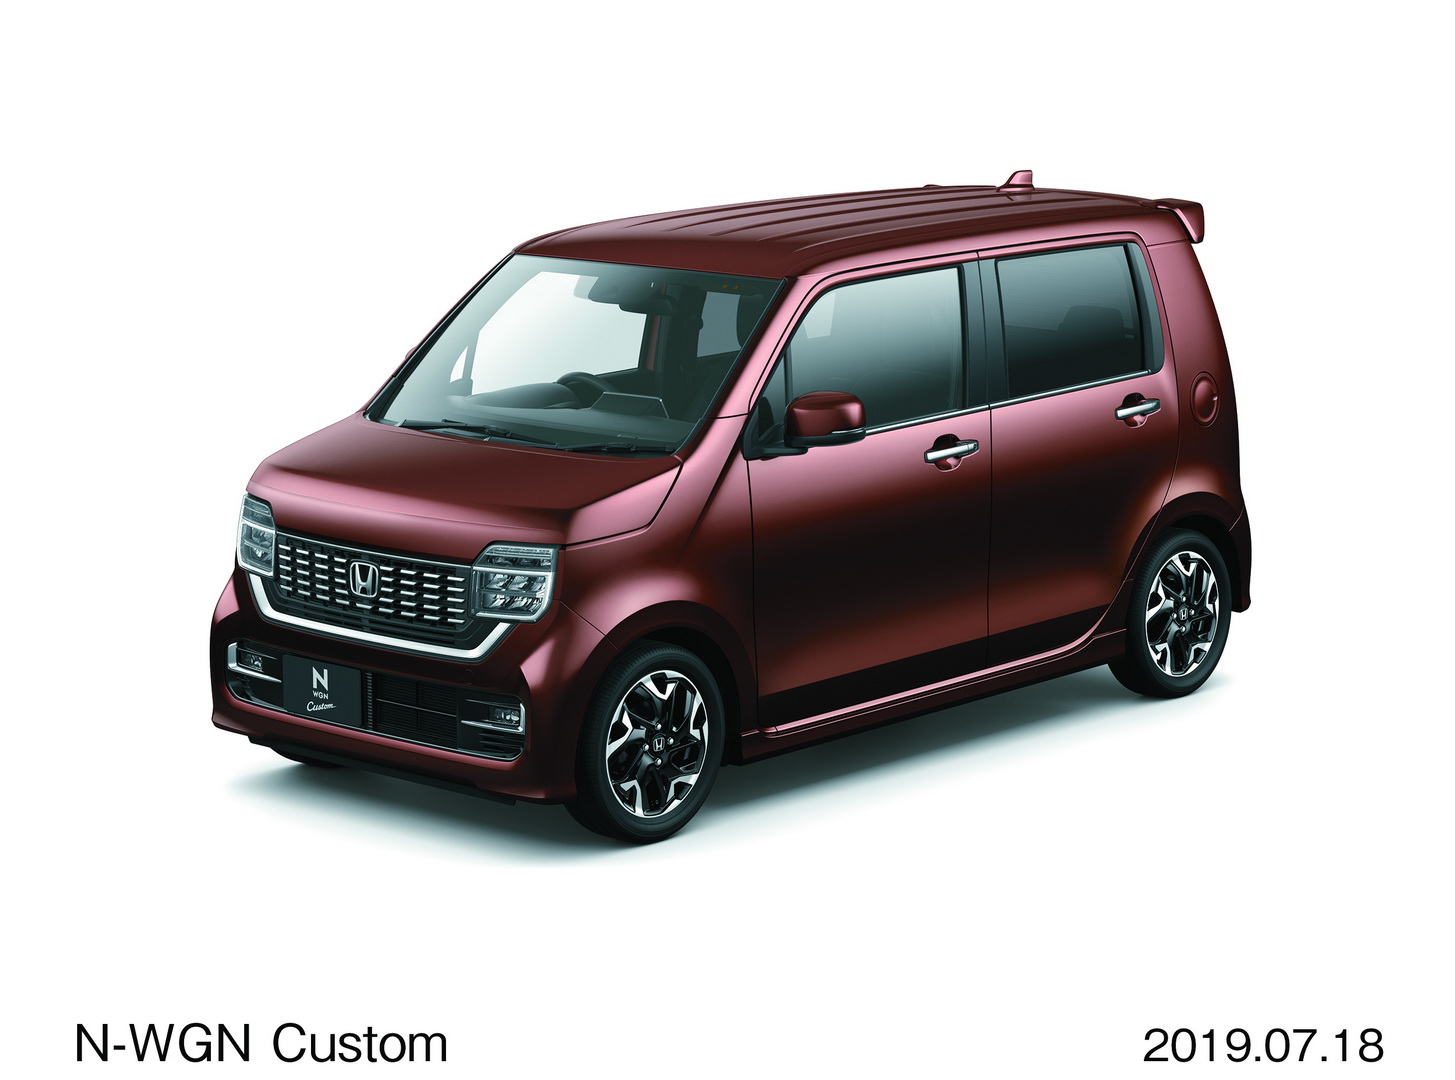 Honda N Wgn Is Japan S Latest Kei Car Carscoops